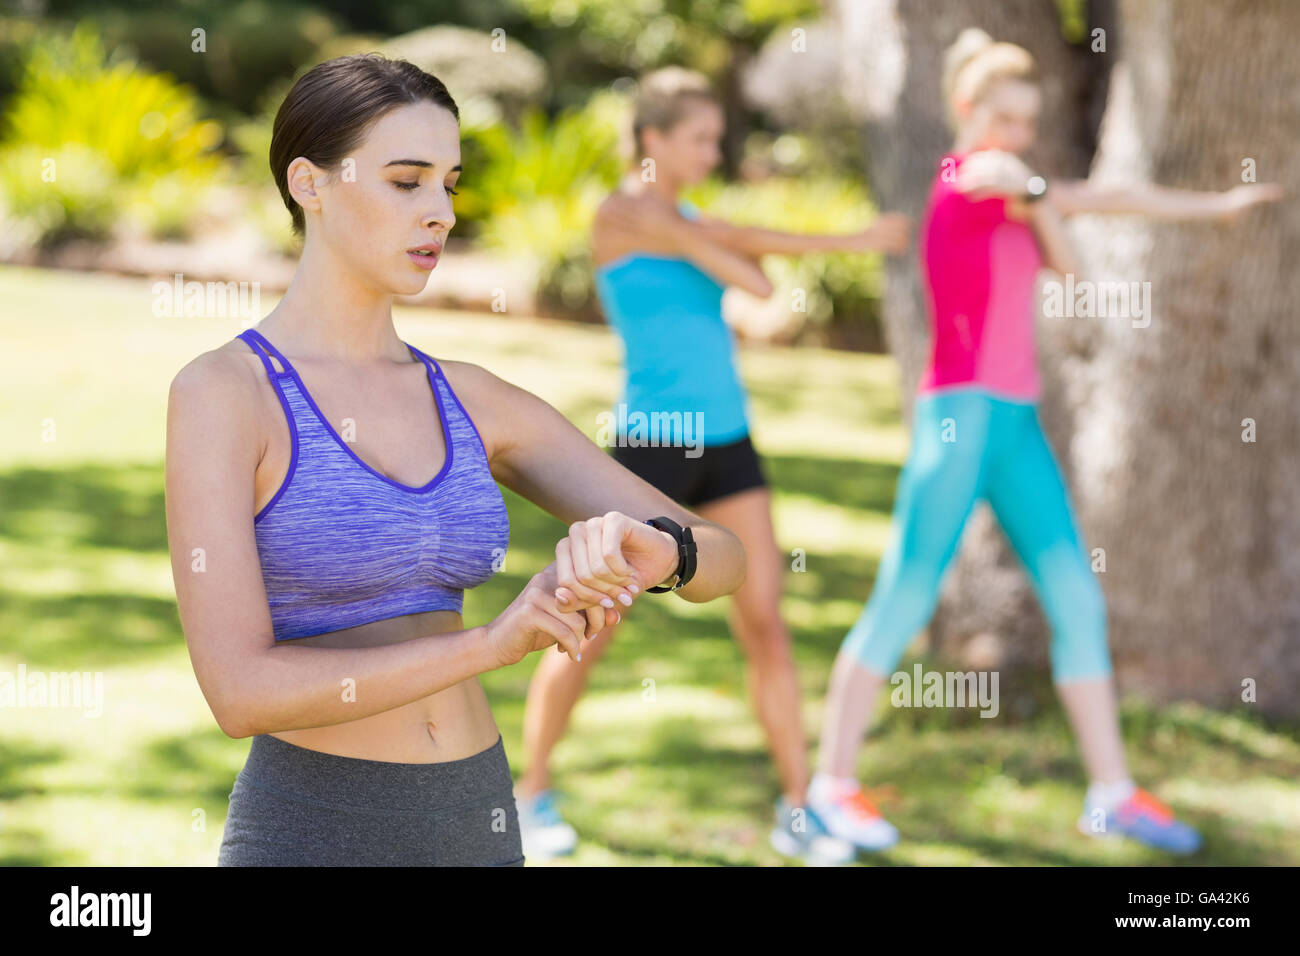 Woman checking time while exercising Stock Photo